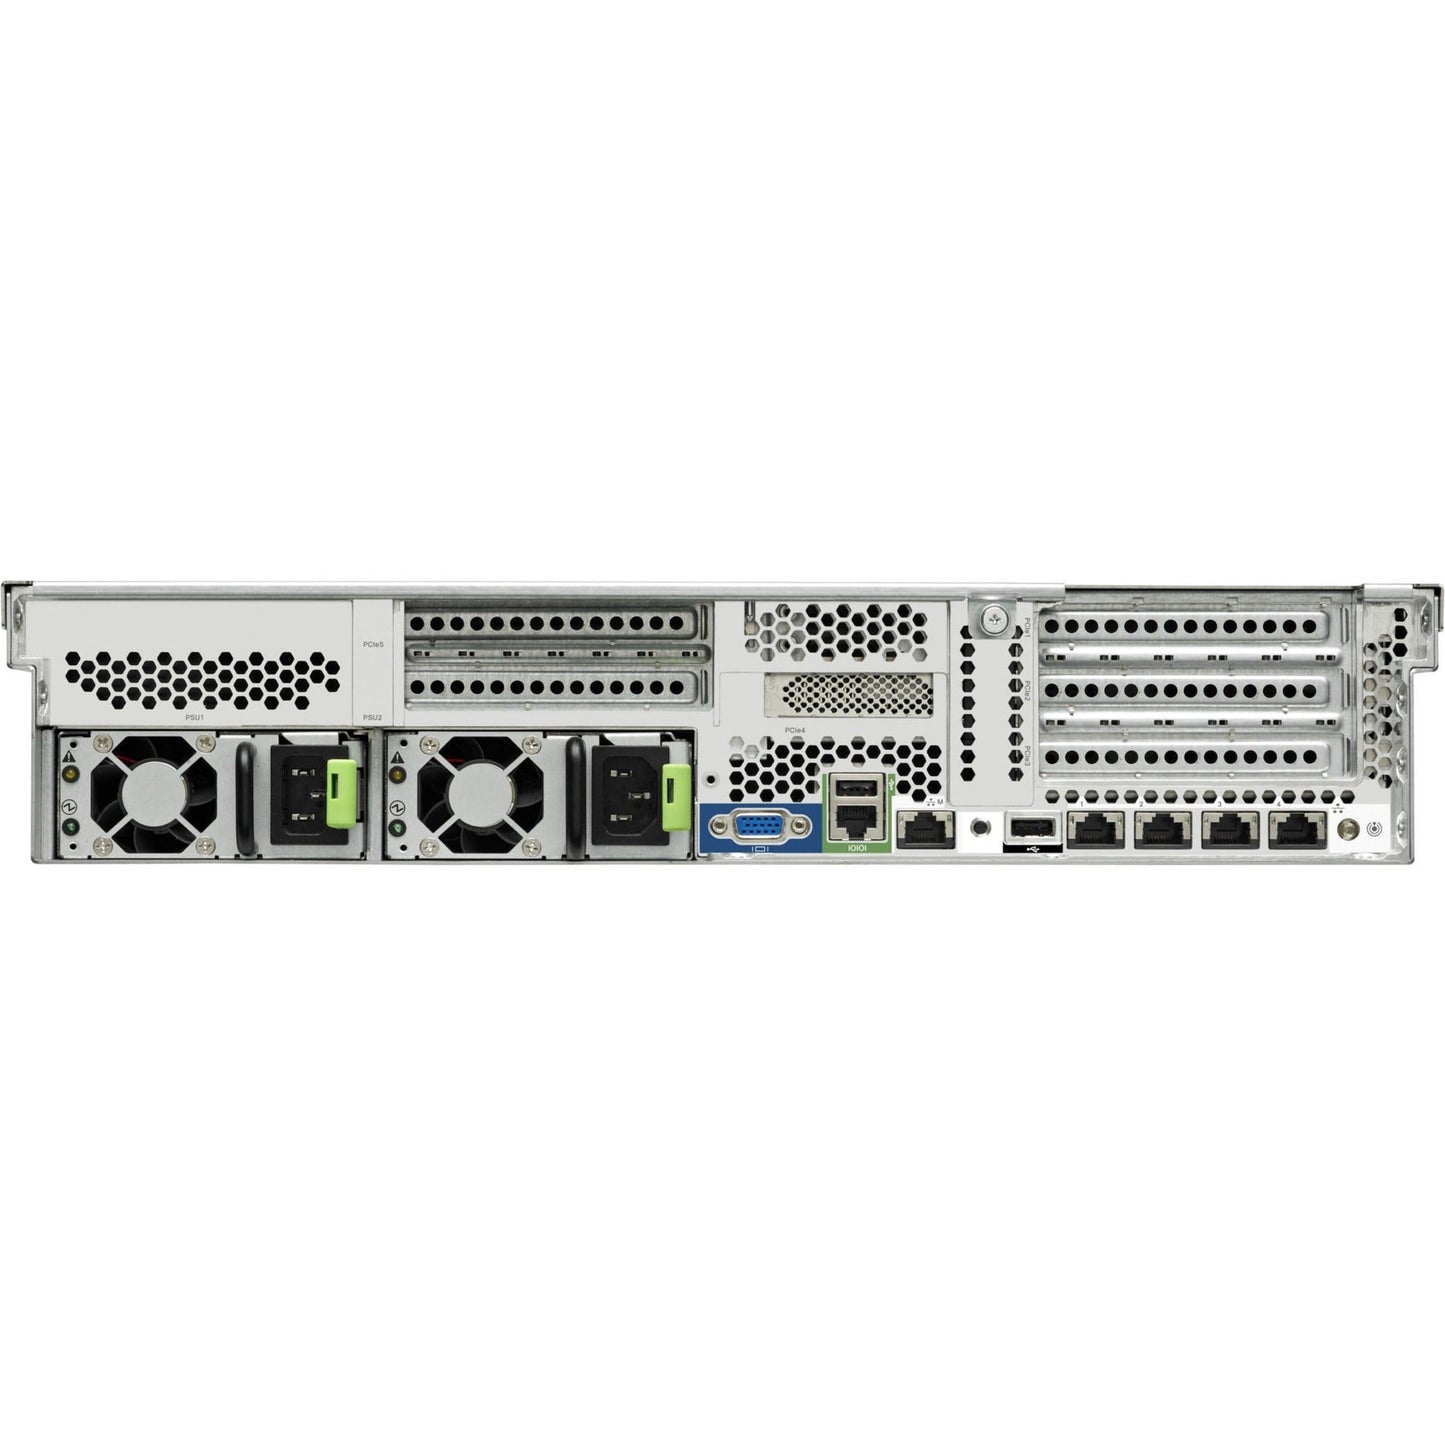 Cisco C240 M3 2U Rack Server - 2 x Intel Xeon E5-2680 v2 2.80 GHz - 256 GB RAM - 600 GB HDD - (2 x 300GB) HDD Configuration - Serial Attached SCSI (SAS) Controller